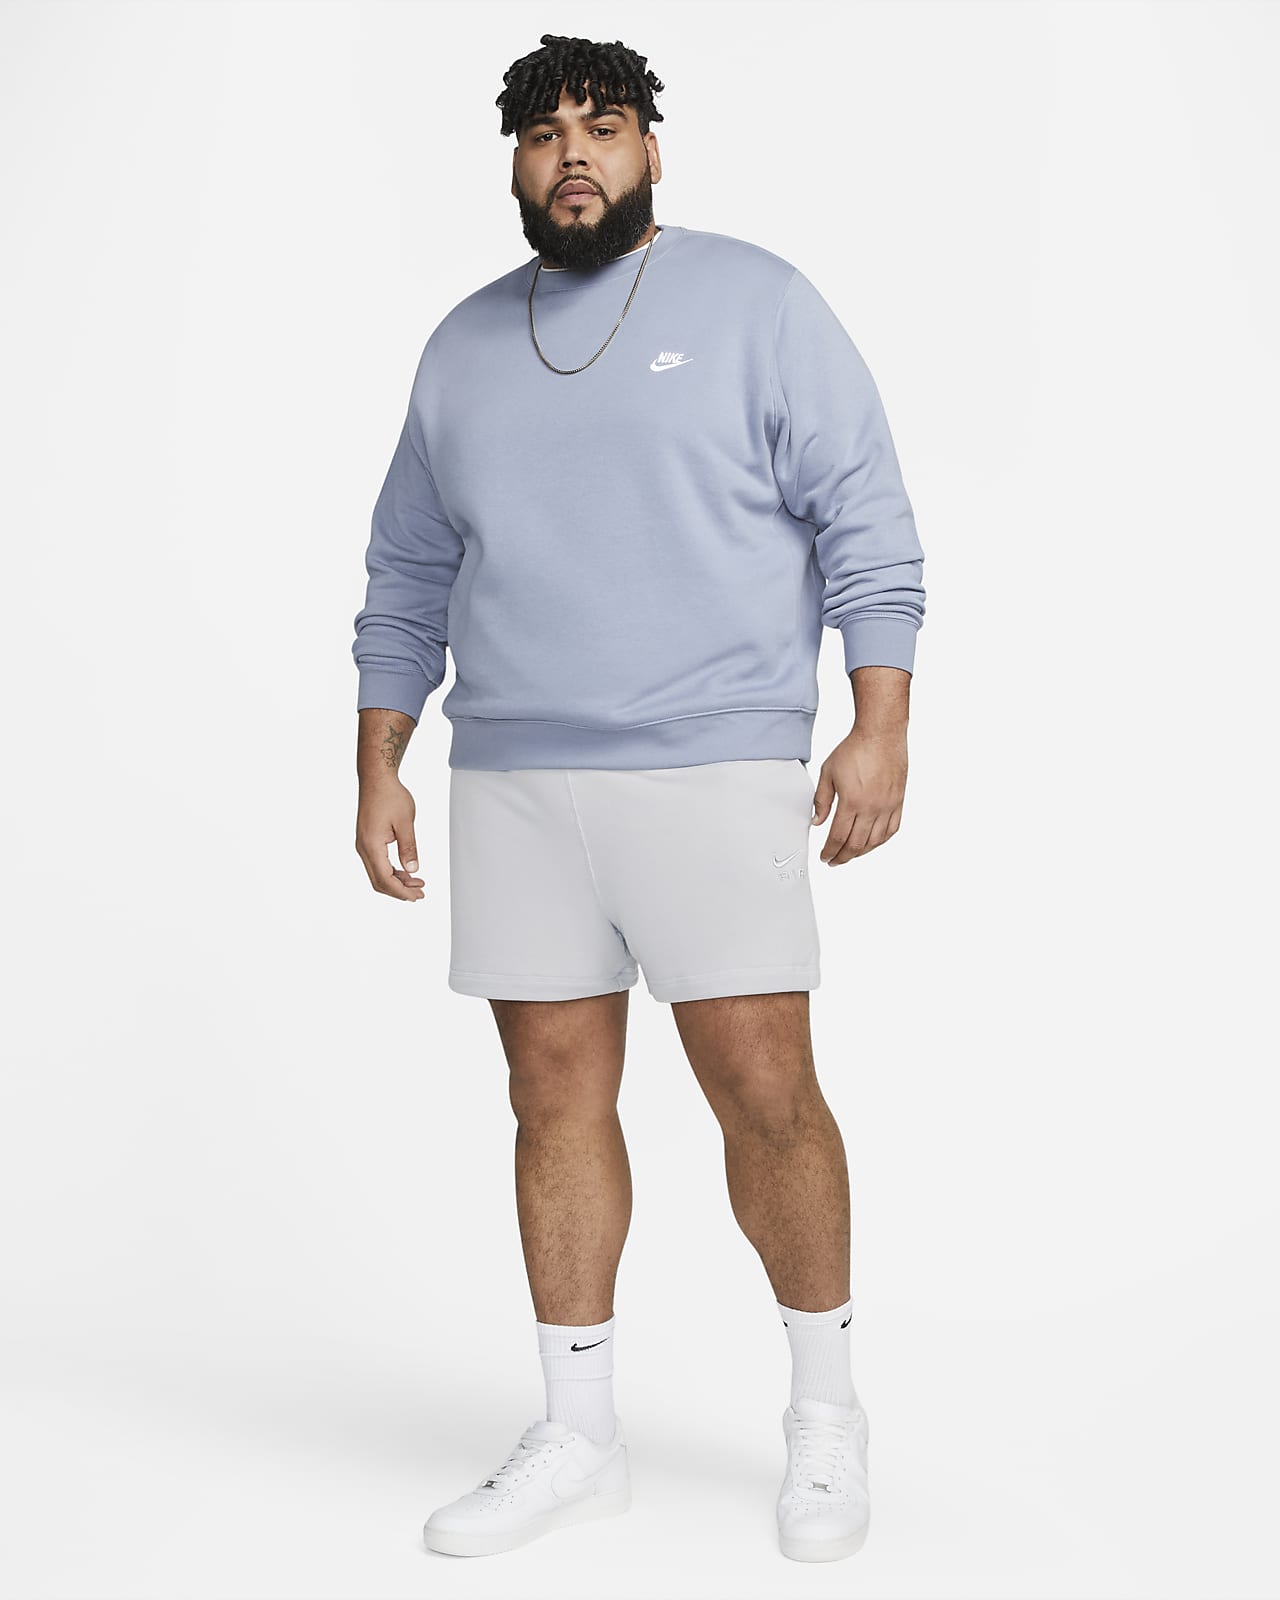 Nike Sportswear Men's Explosive Sweat Shorts Burgundy/White 843520-677 